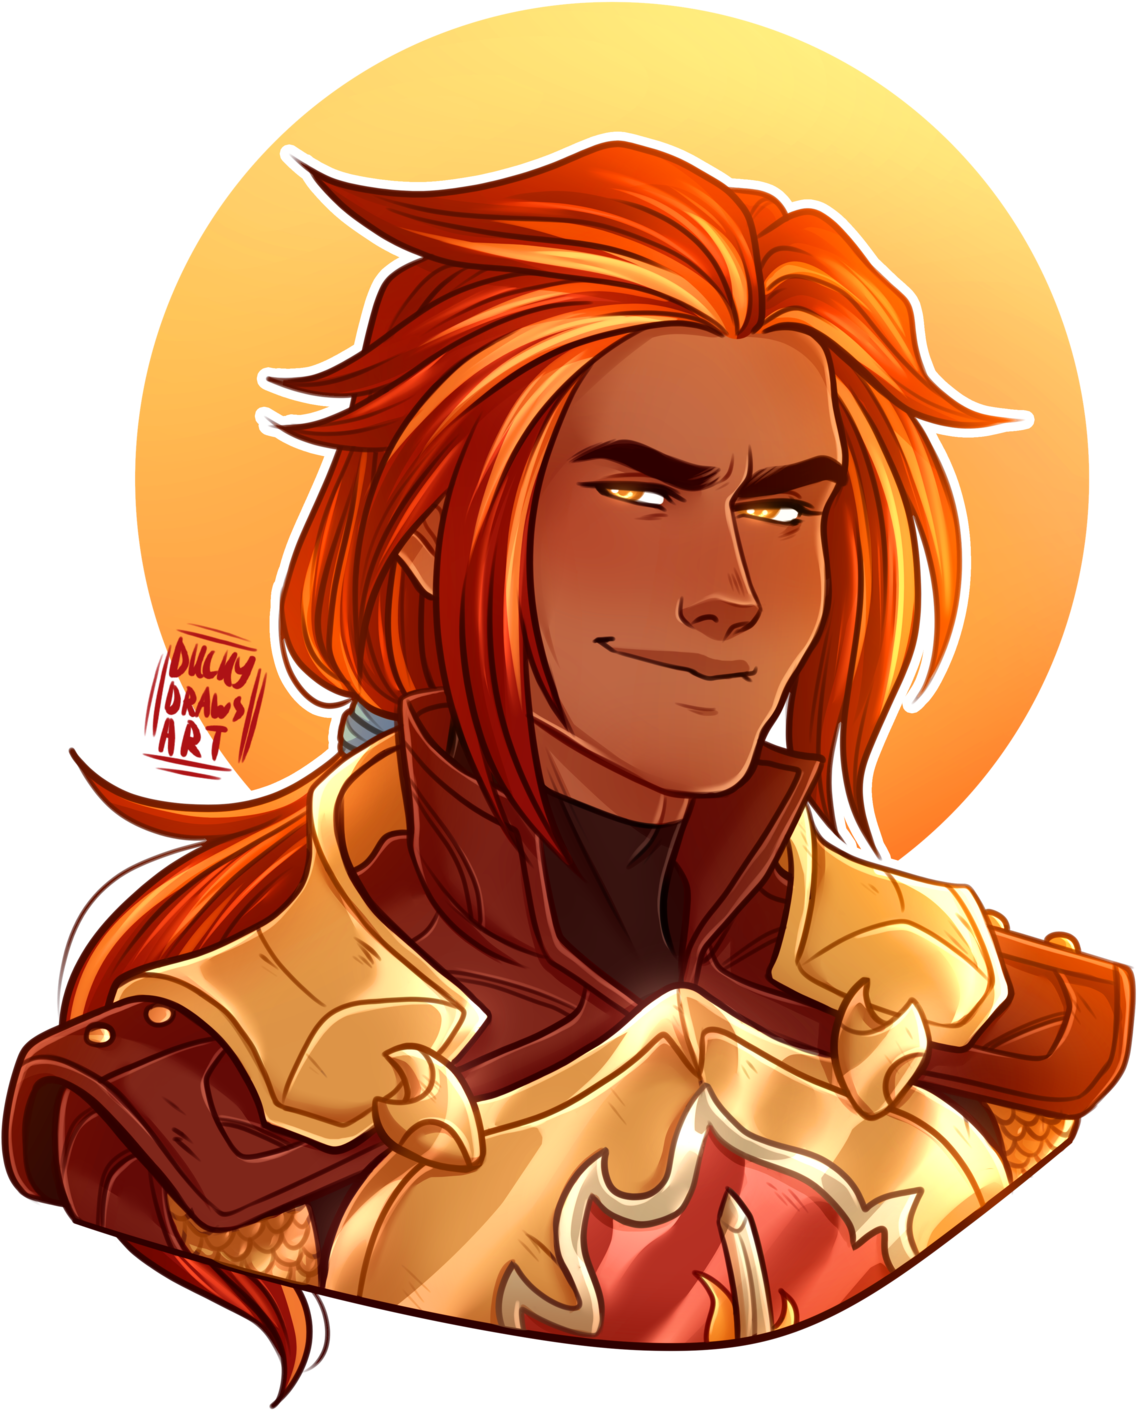 Flame Haired Fantasy Warrior Illustration